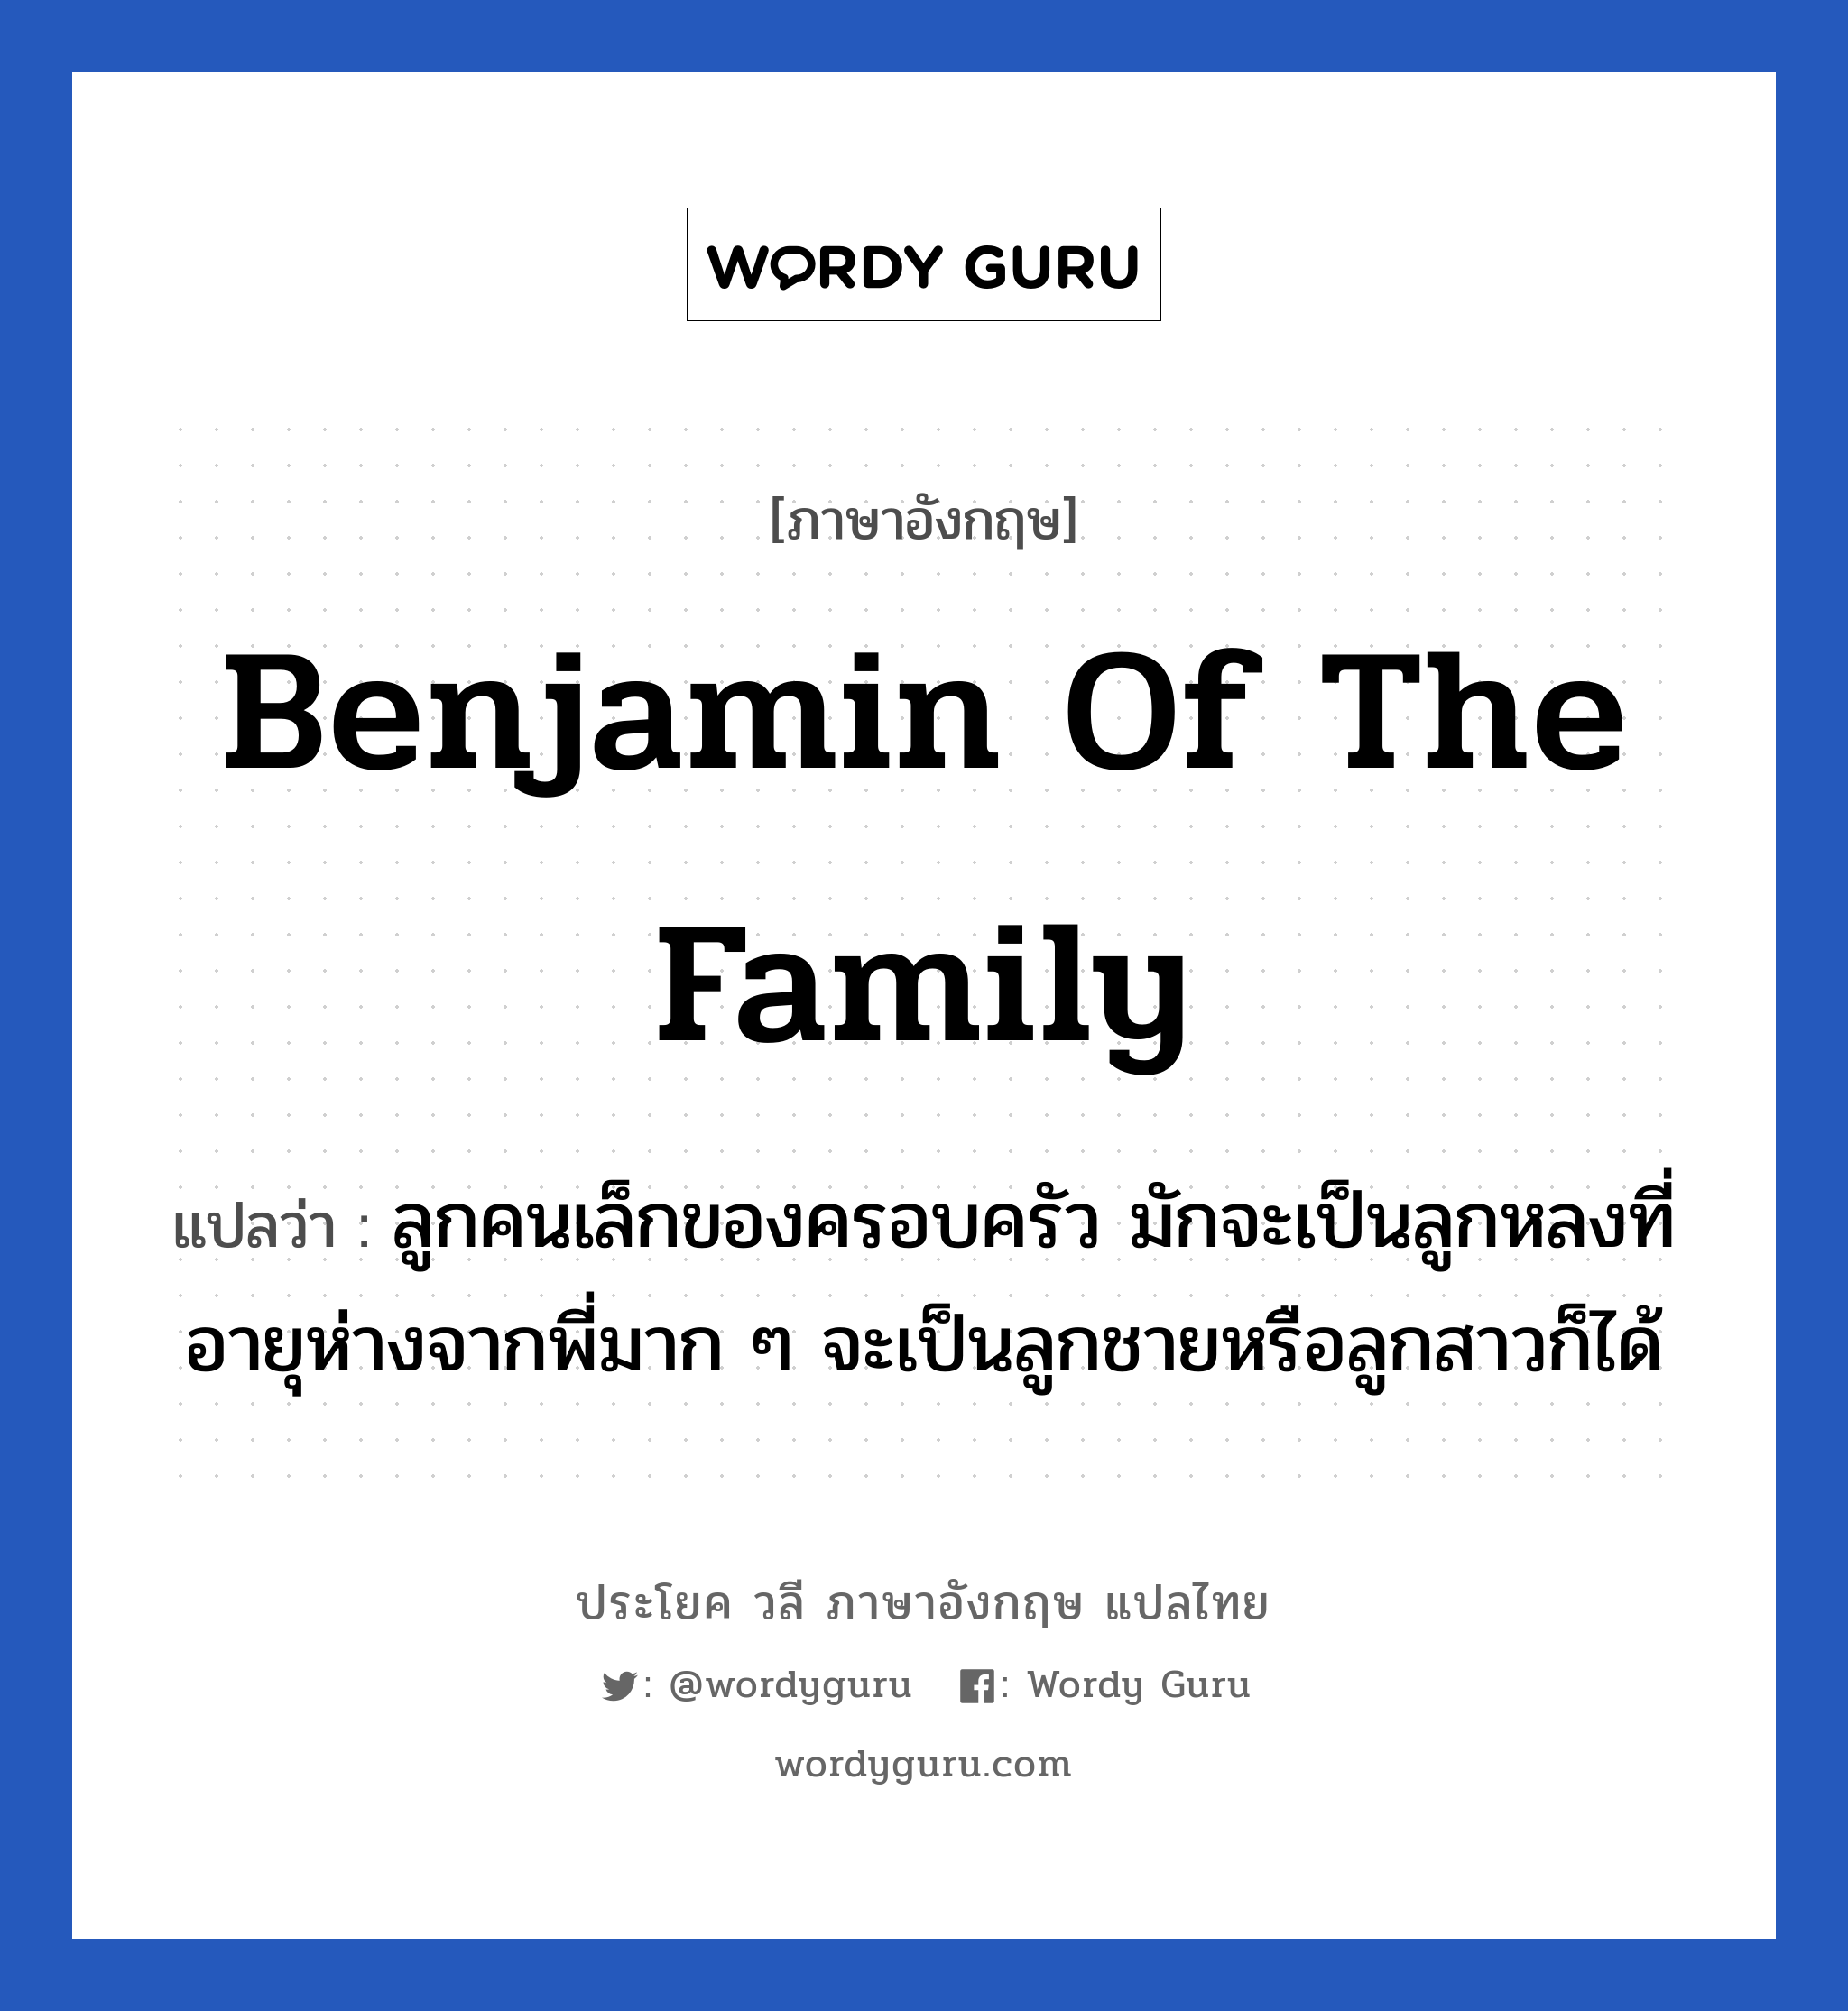 Benjamin of the family แปลว่า?, วลีภาษาอังกฤษ Benjamin of the family แปลว่า ลูกคนเล็กของครอบครัว มักจะเป็นลูกหลงที่อายุห่างจากพี่มาก ๆ จะเป็นลูกชายหรือลูกสาวก็ได้